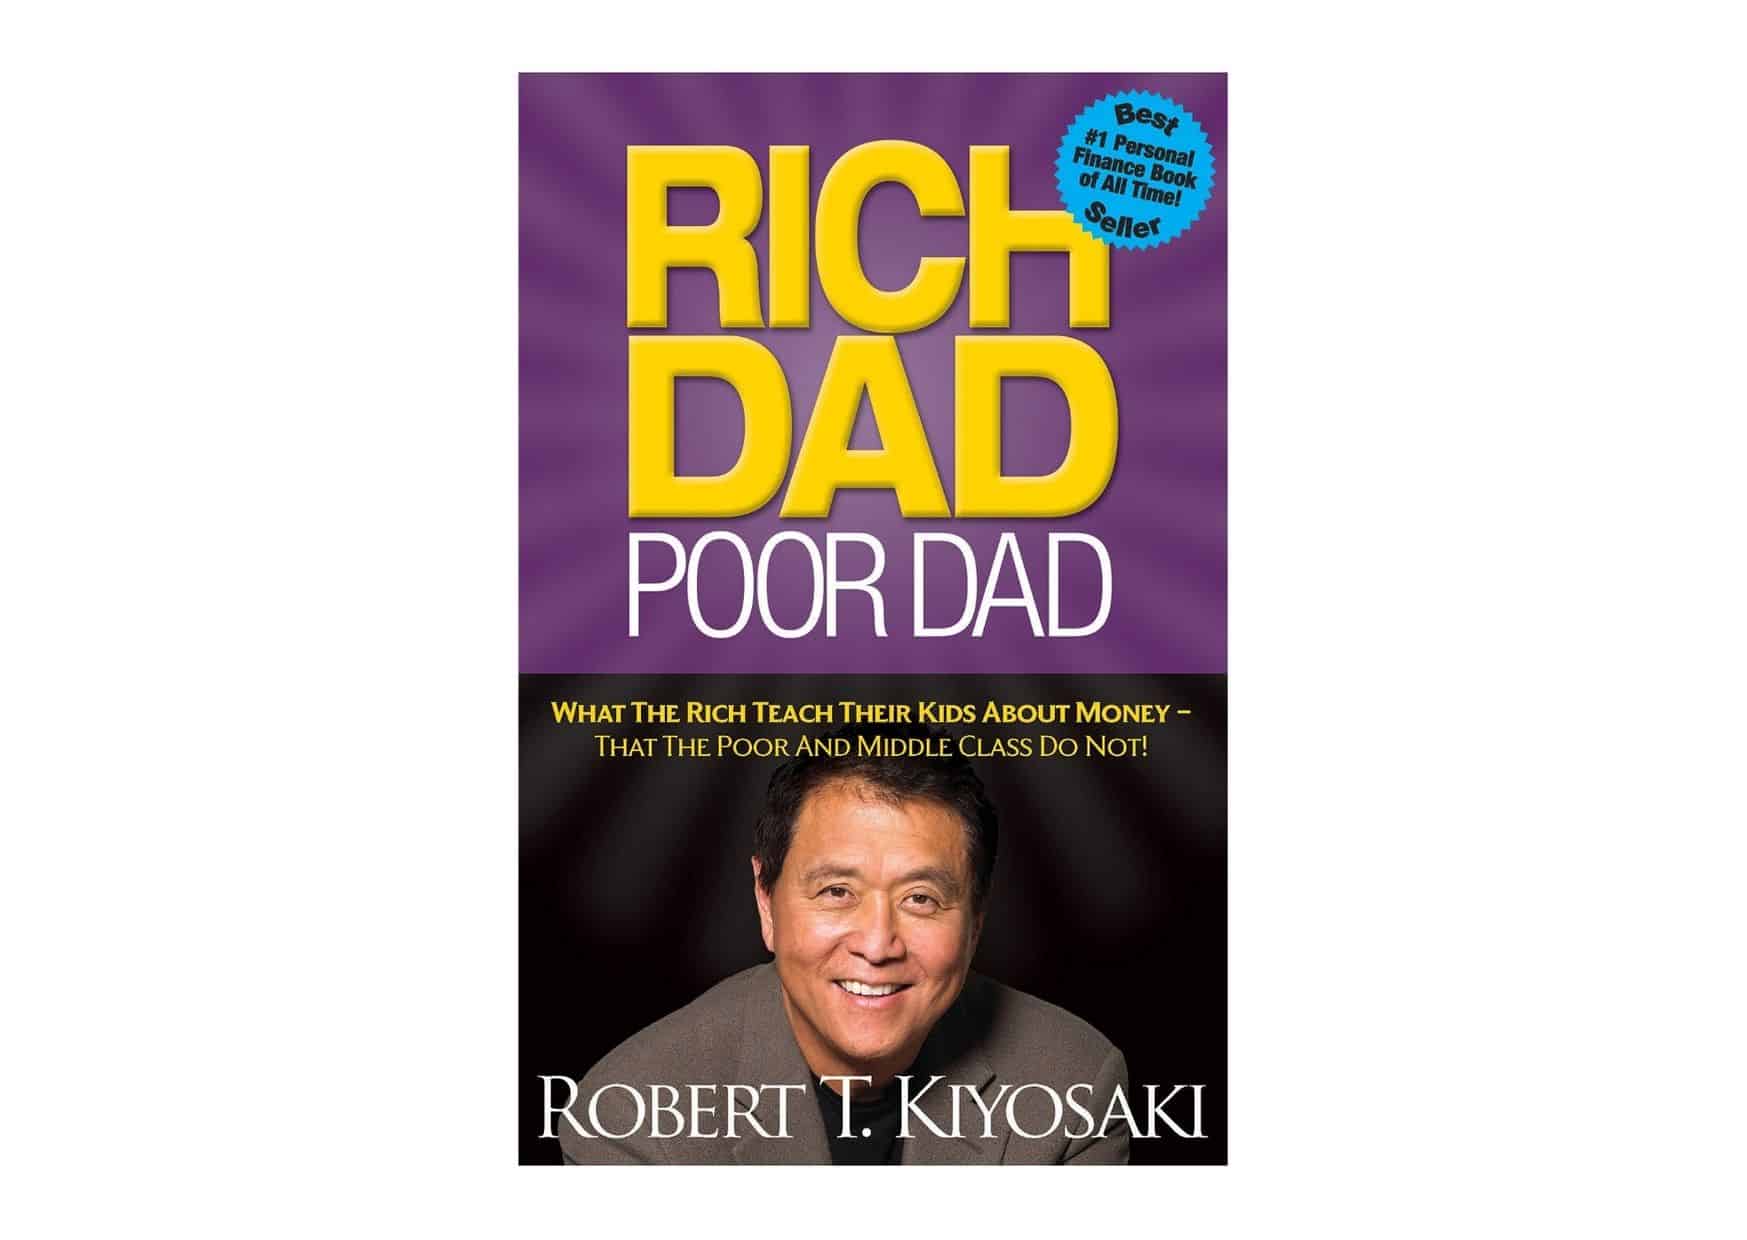 Rich Dad Poor Dad by Robert Kiyosaki - Personal Development Book